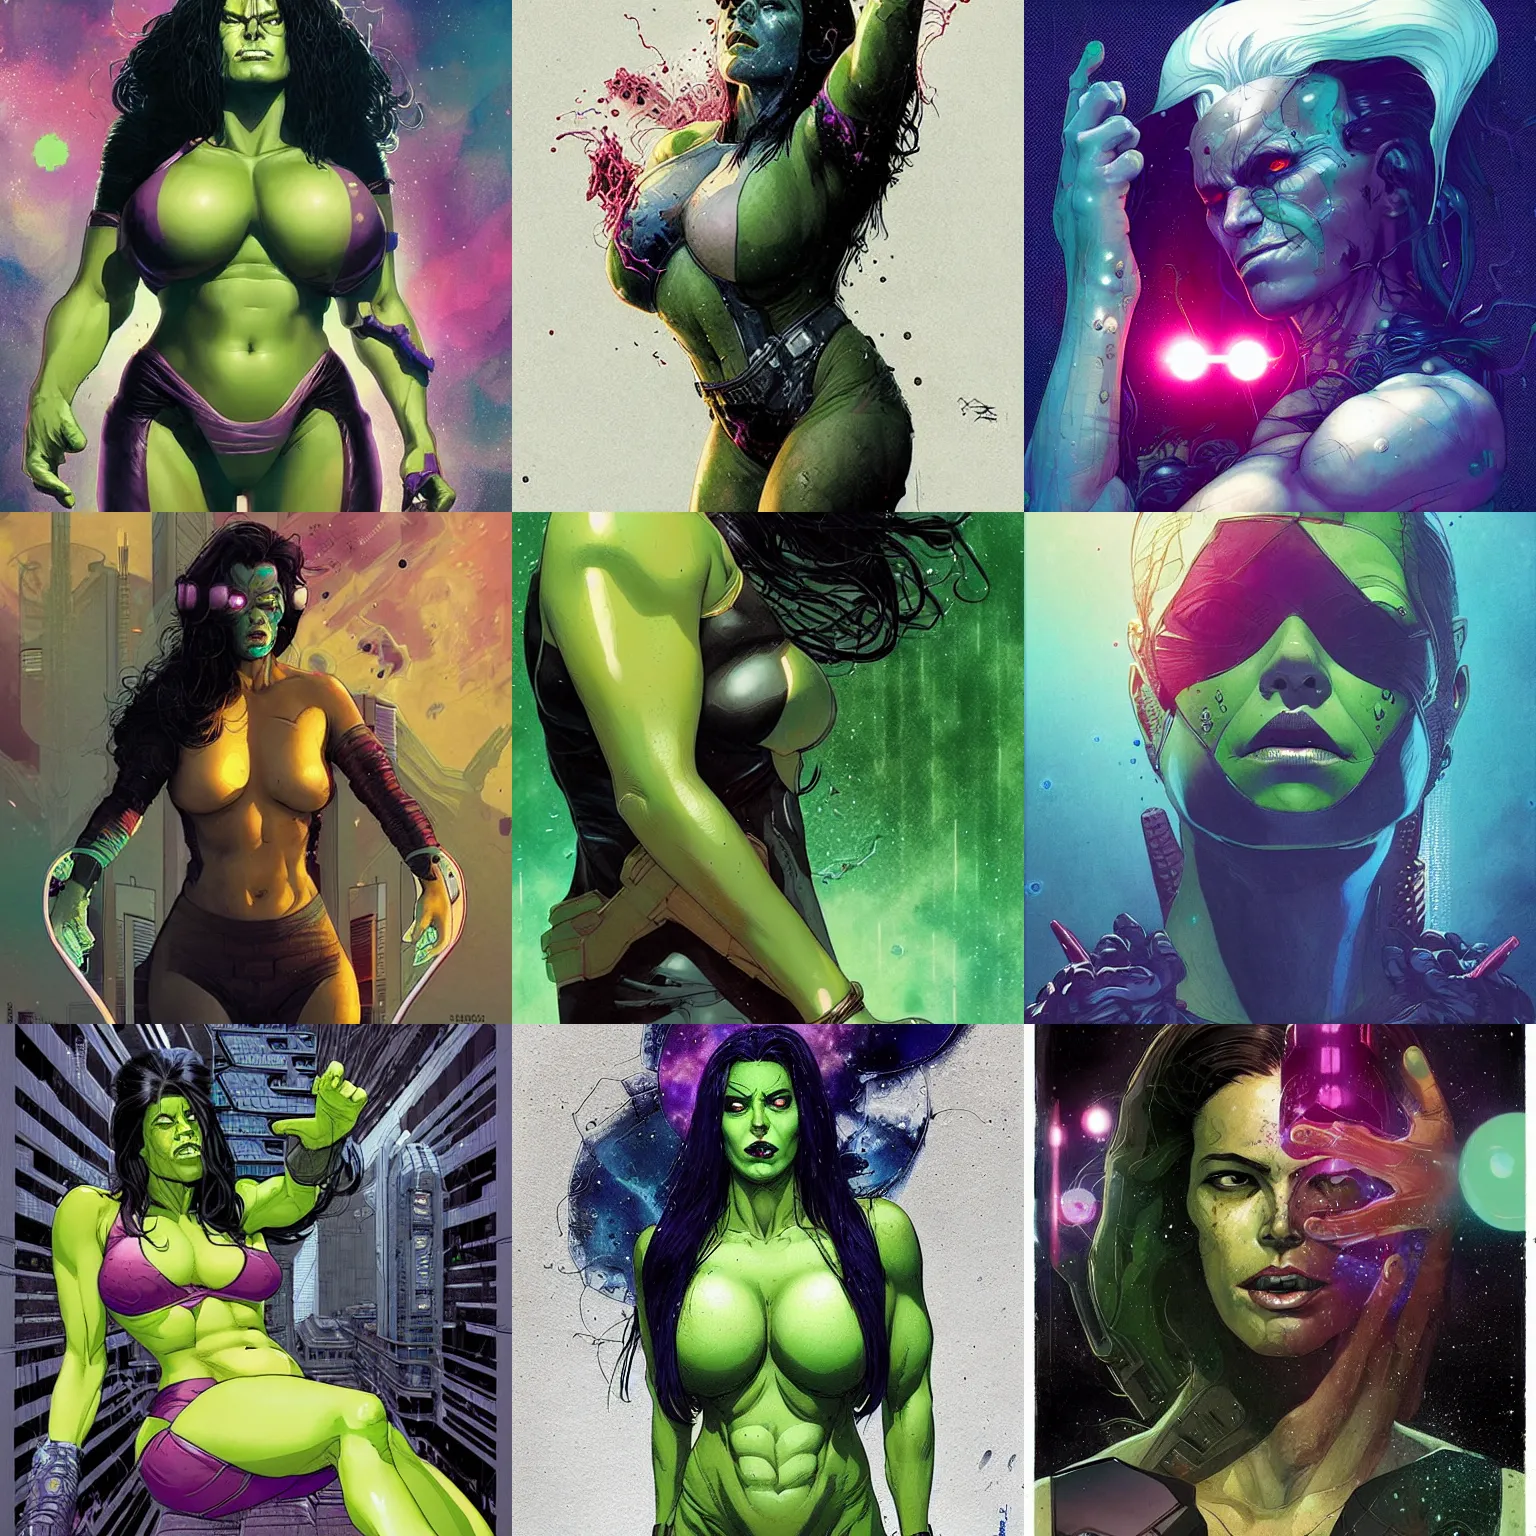 Prompt: she - hulk as thanos emerging from interstellar water in cyberpunk theme by conrad roset, nicola samuri, dino valls, jakub rebelka, android james, ruan jia, rule of thirds, seductive look, beautiful